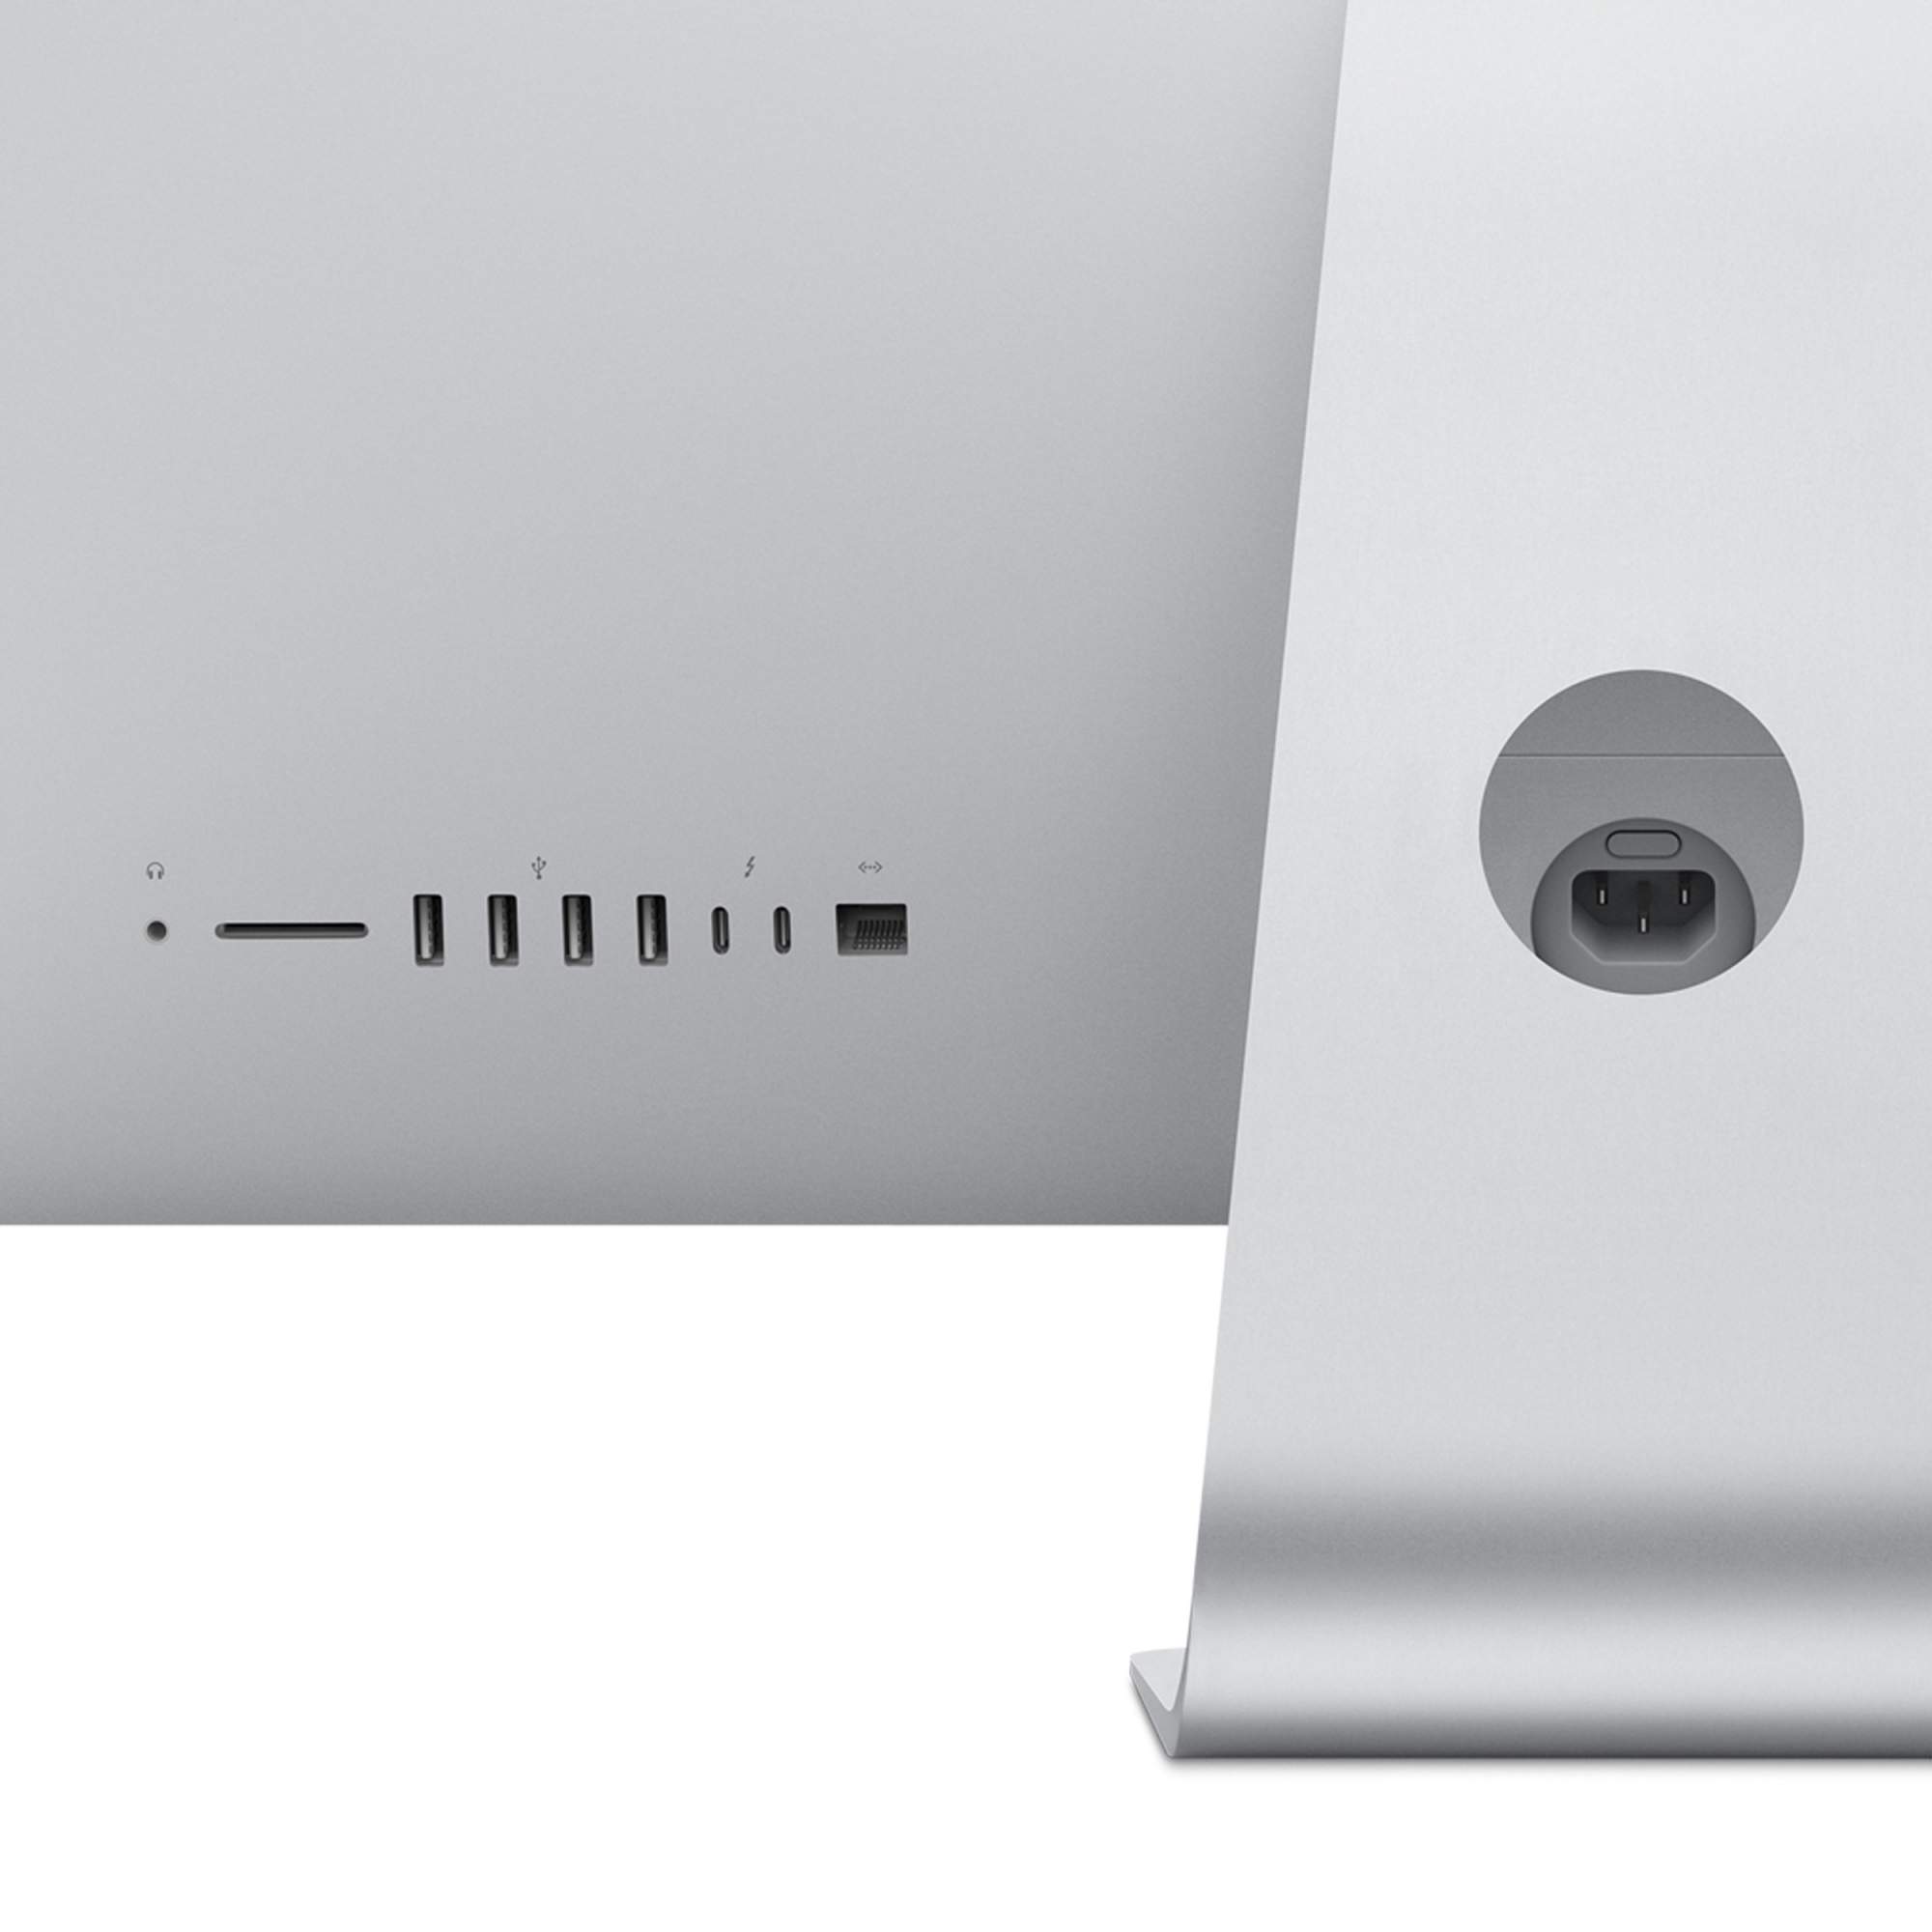 Моноблок Apple iMac 27 (MXWV2RU/A) Silver